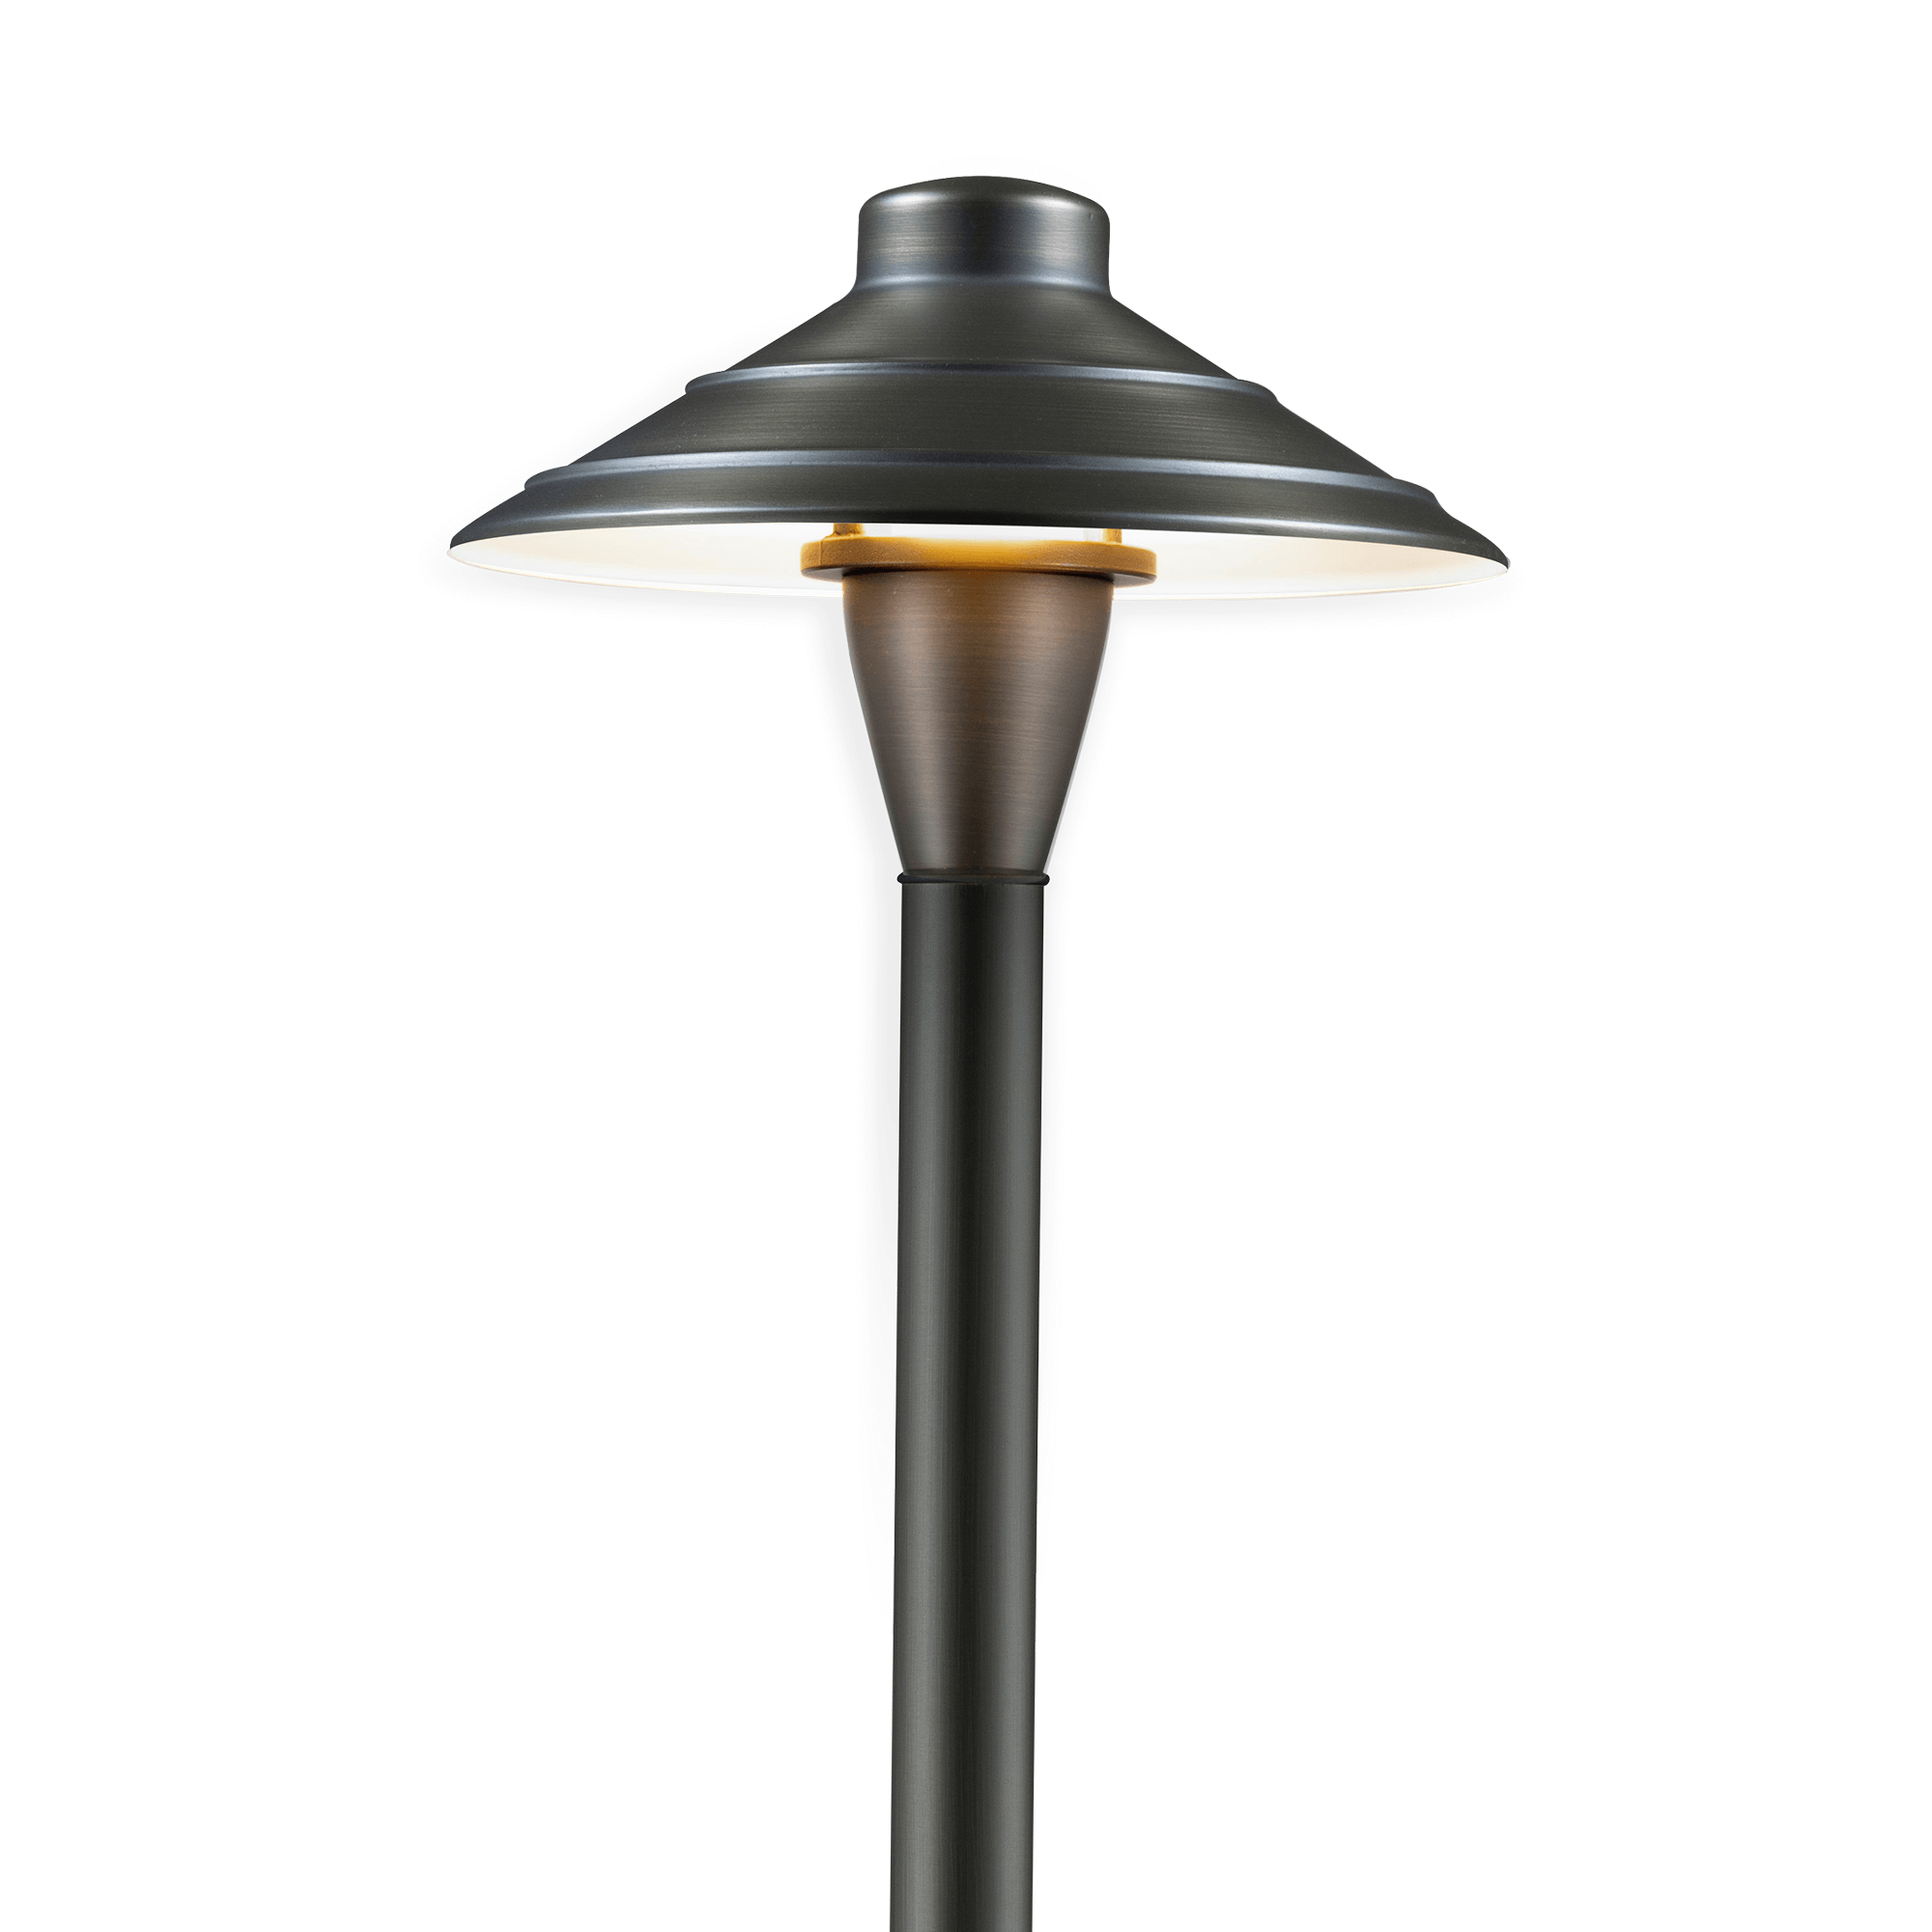 LED Landscape Lighting Kit - 6 Cone Shade Path Lights - 2 Spotlights - Low  Voltage Transformer